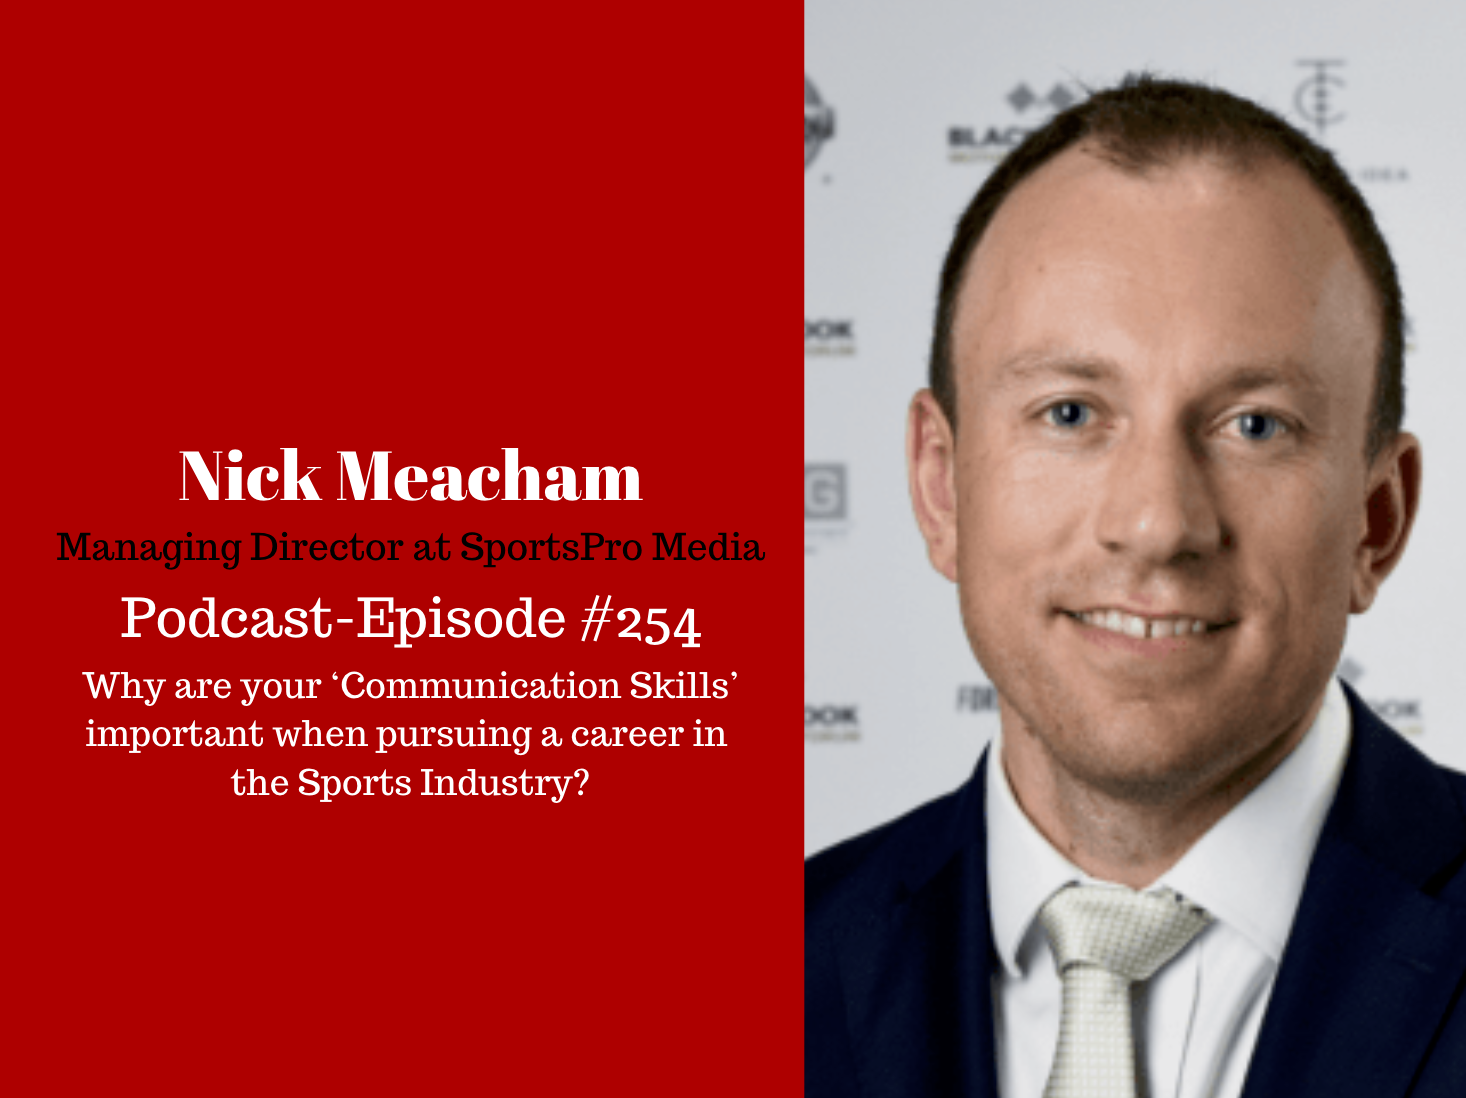 Nick Meacham